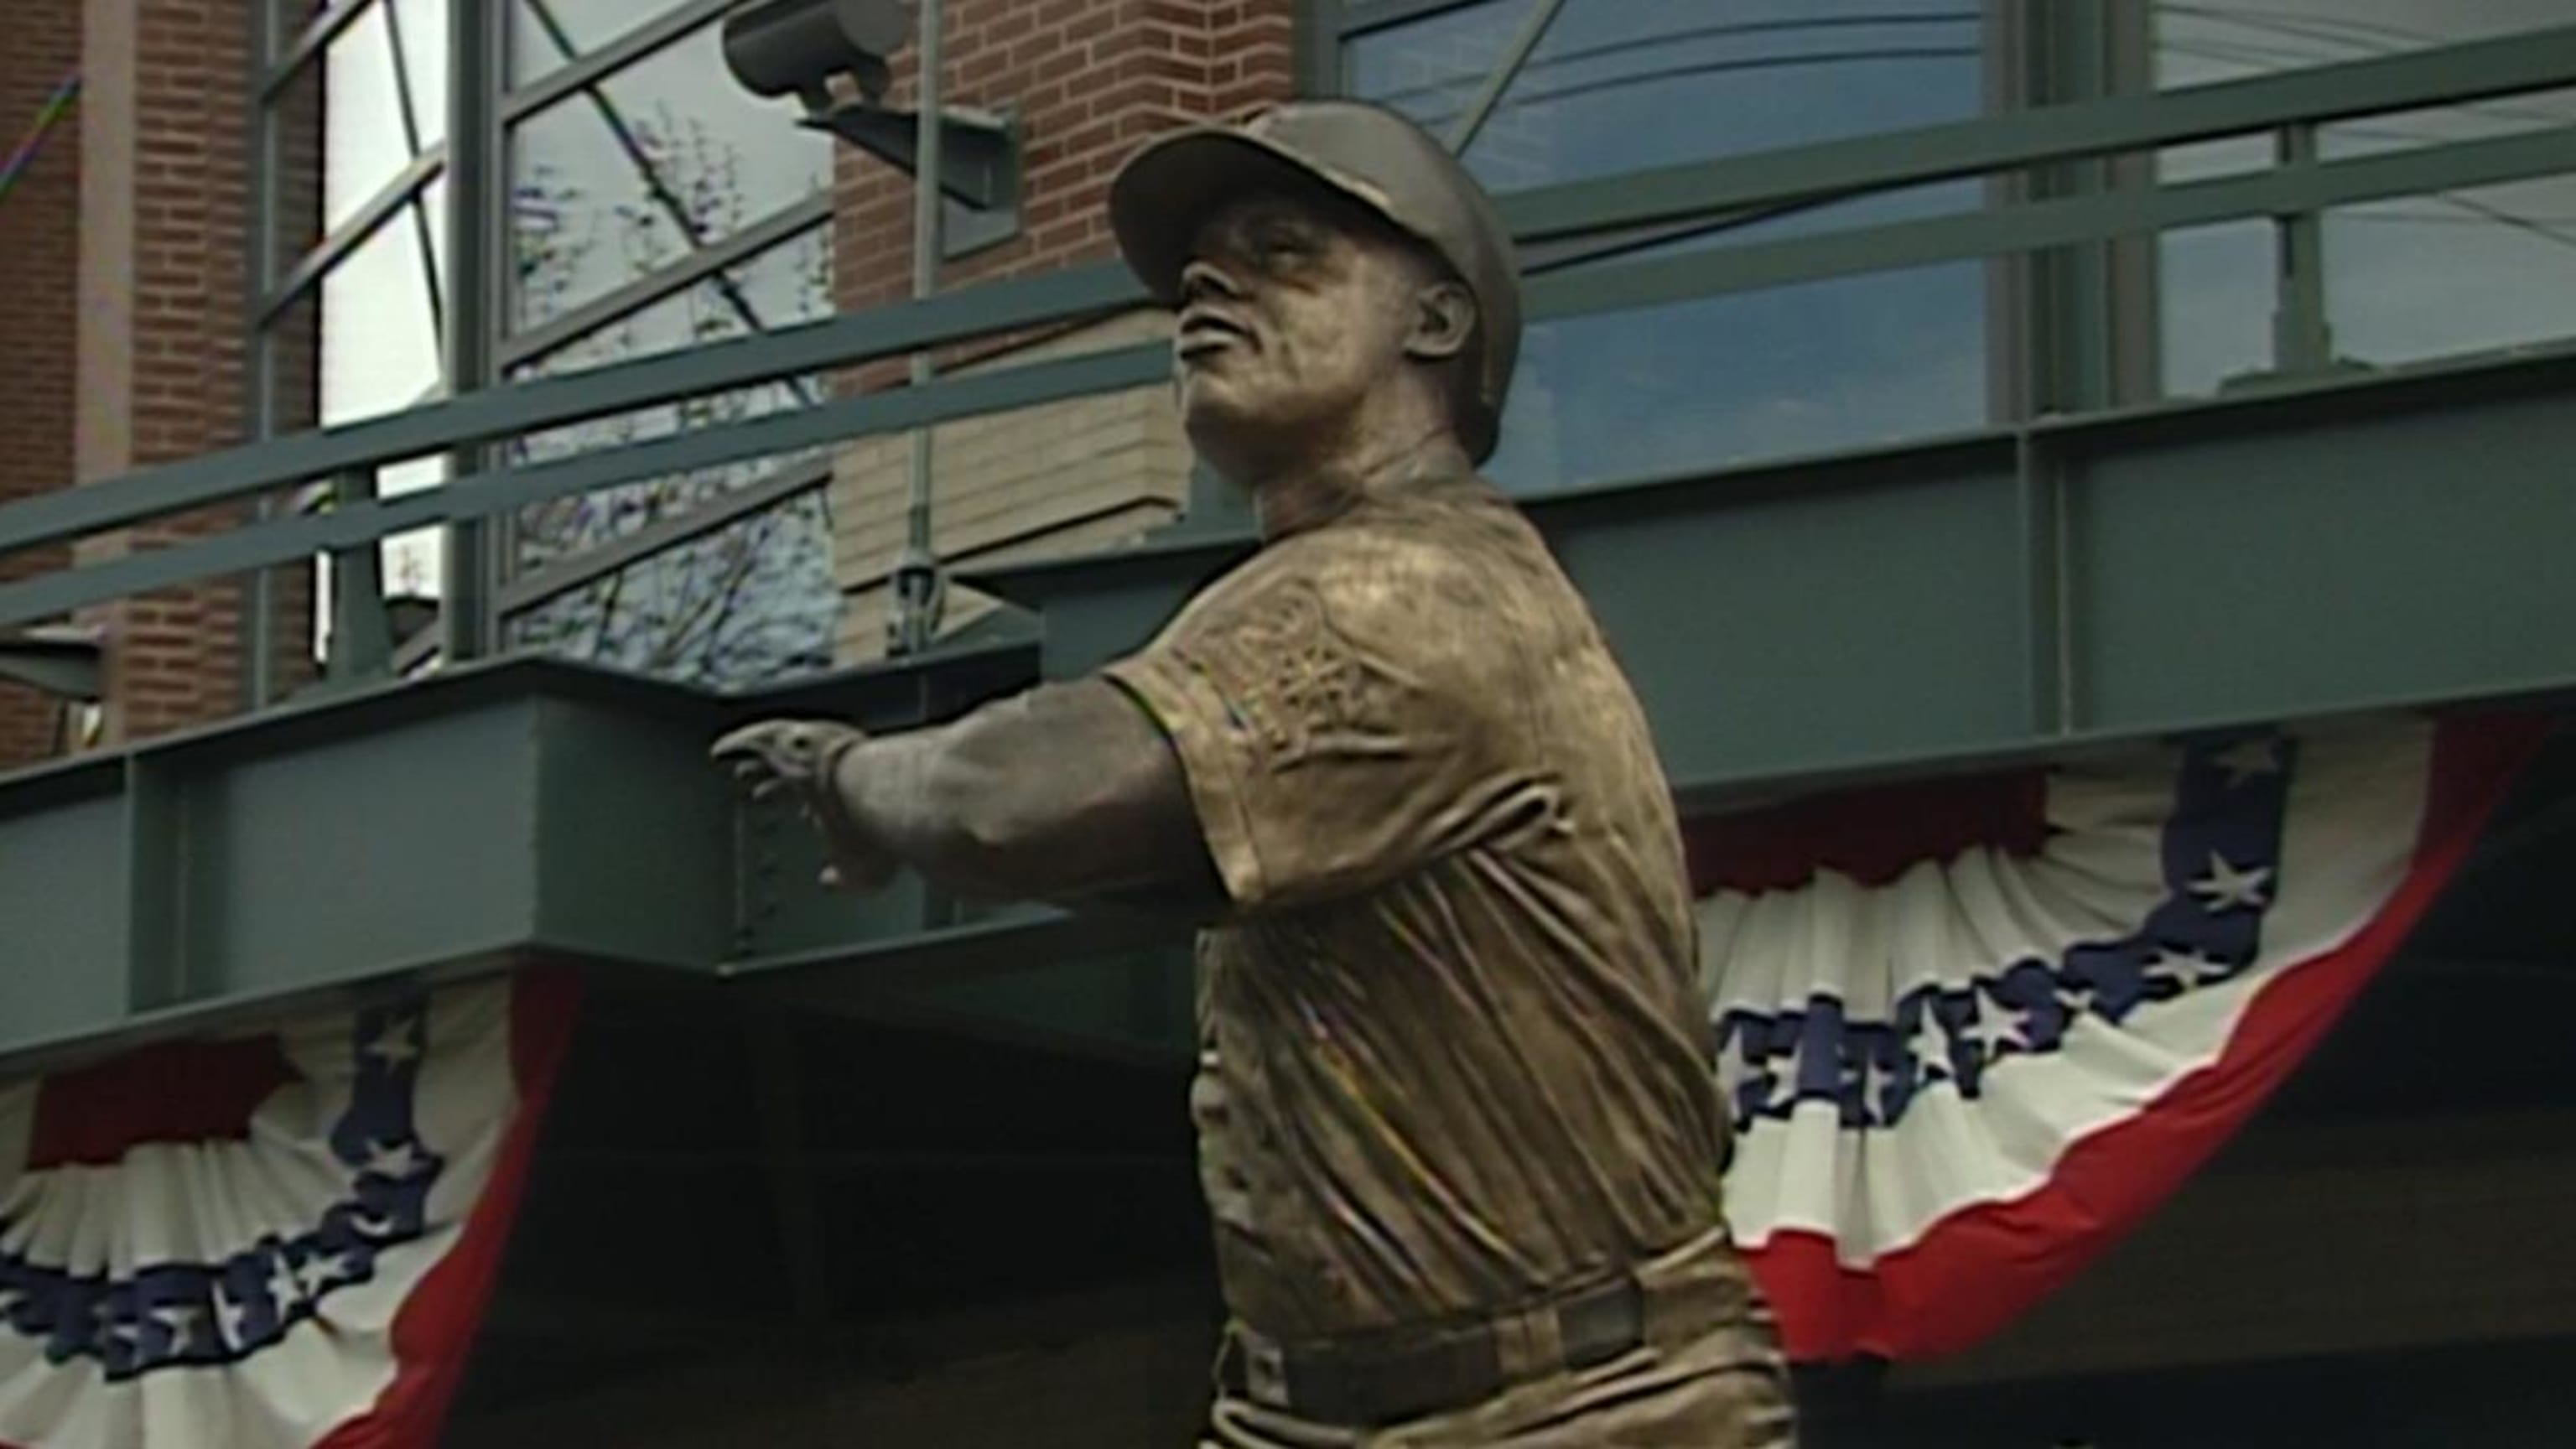 Mariners unveil statue honoring Ken Griffey Jr., Mariners